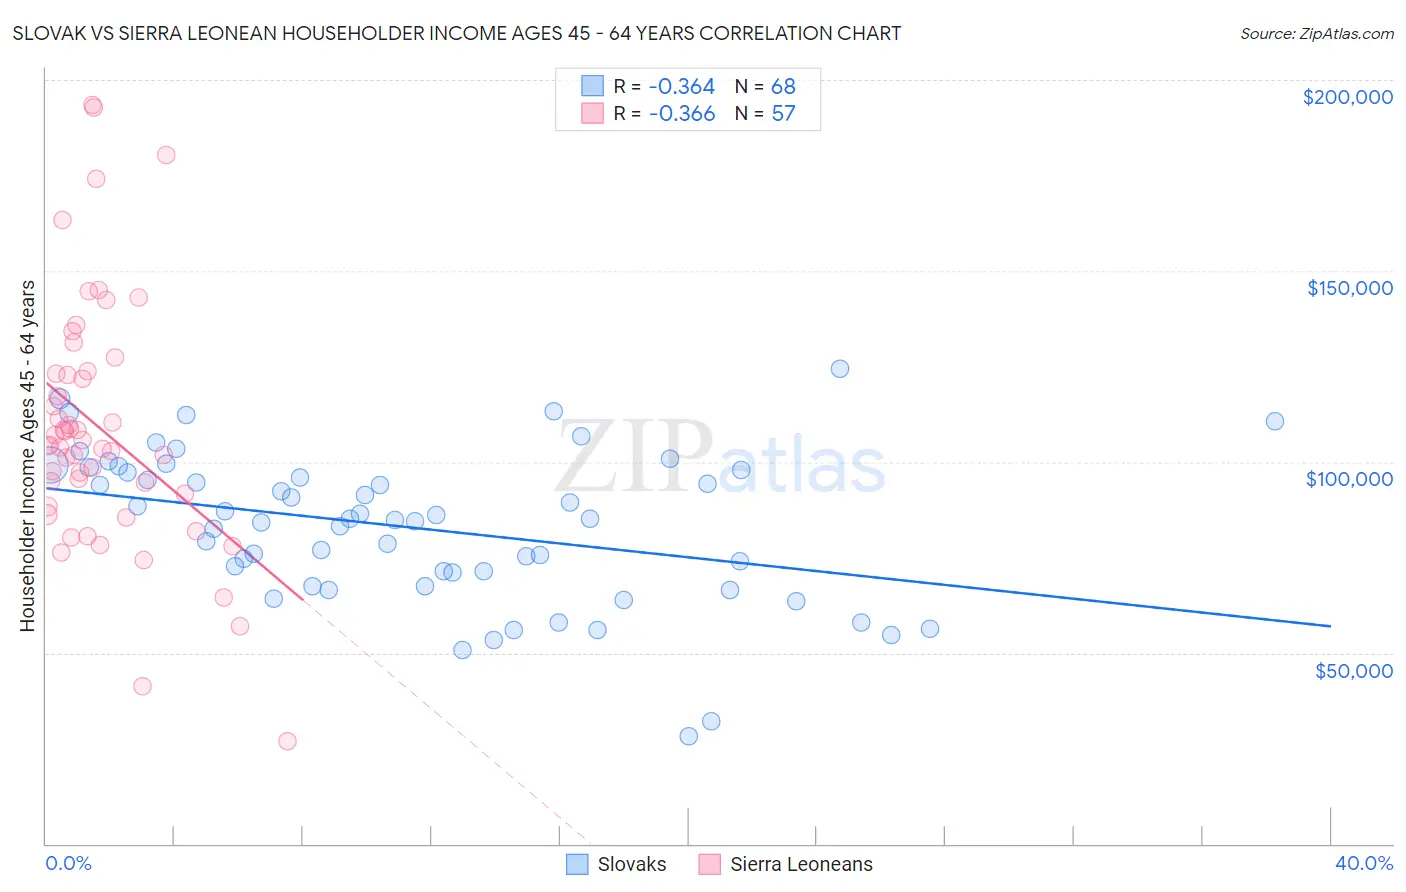 Slovak vs Sierra Leonean Householder Income Ages 45 - 64 years